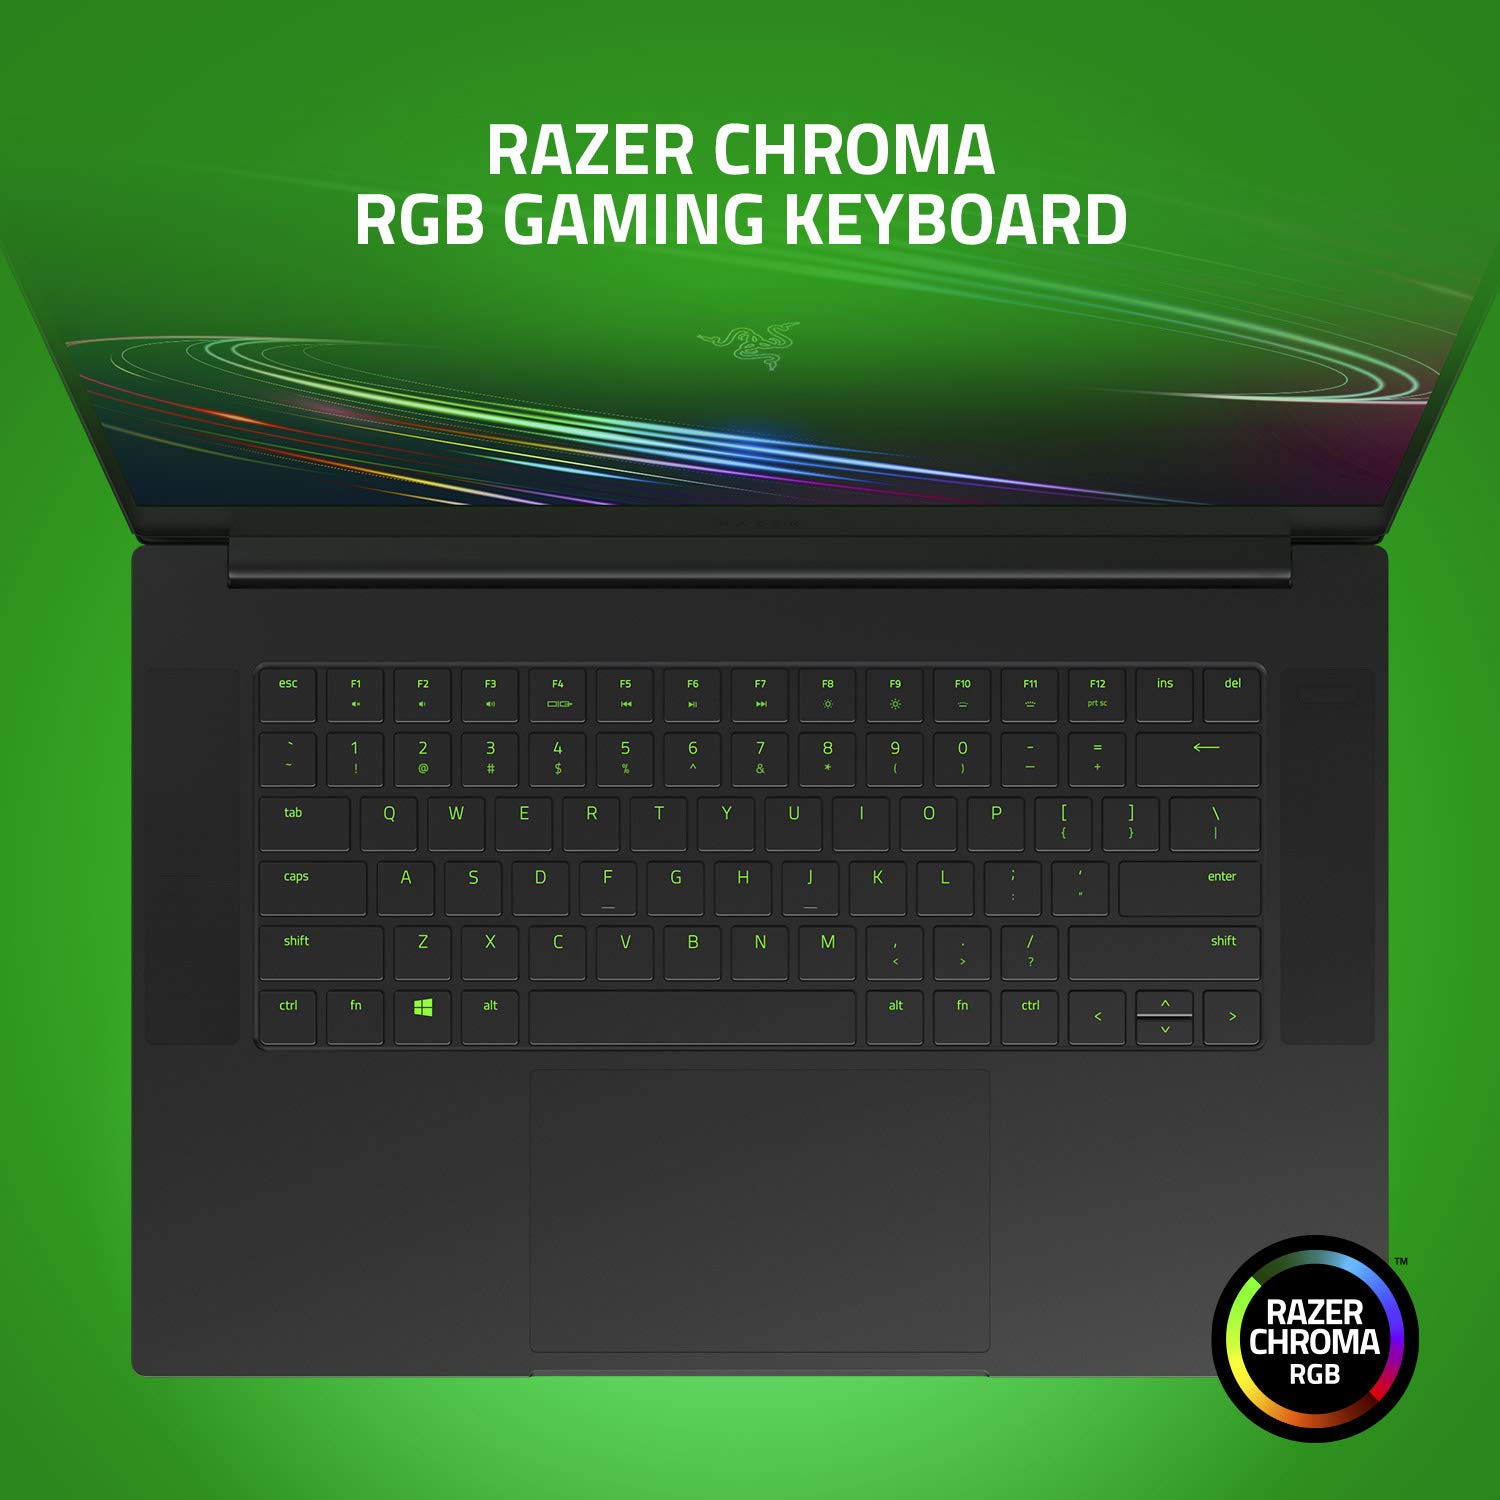 Razer Blade 15 Base Gaming Laptop 2020: Intel Core i7-10750H 6 Core, NVIDIA GeForce RTX 2070 Max-Q, 15.6